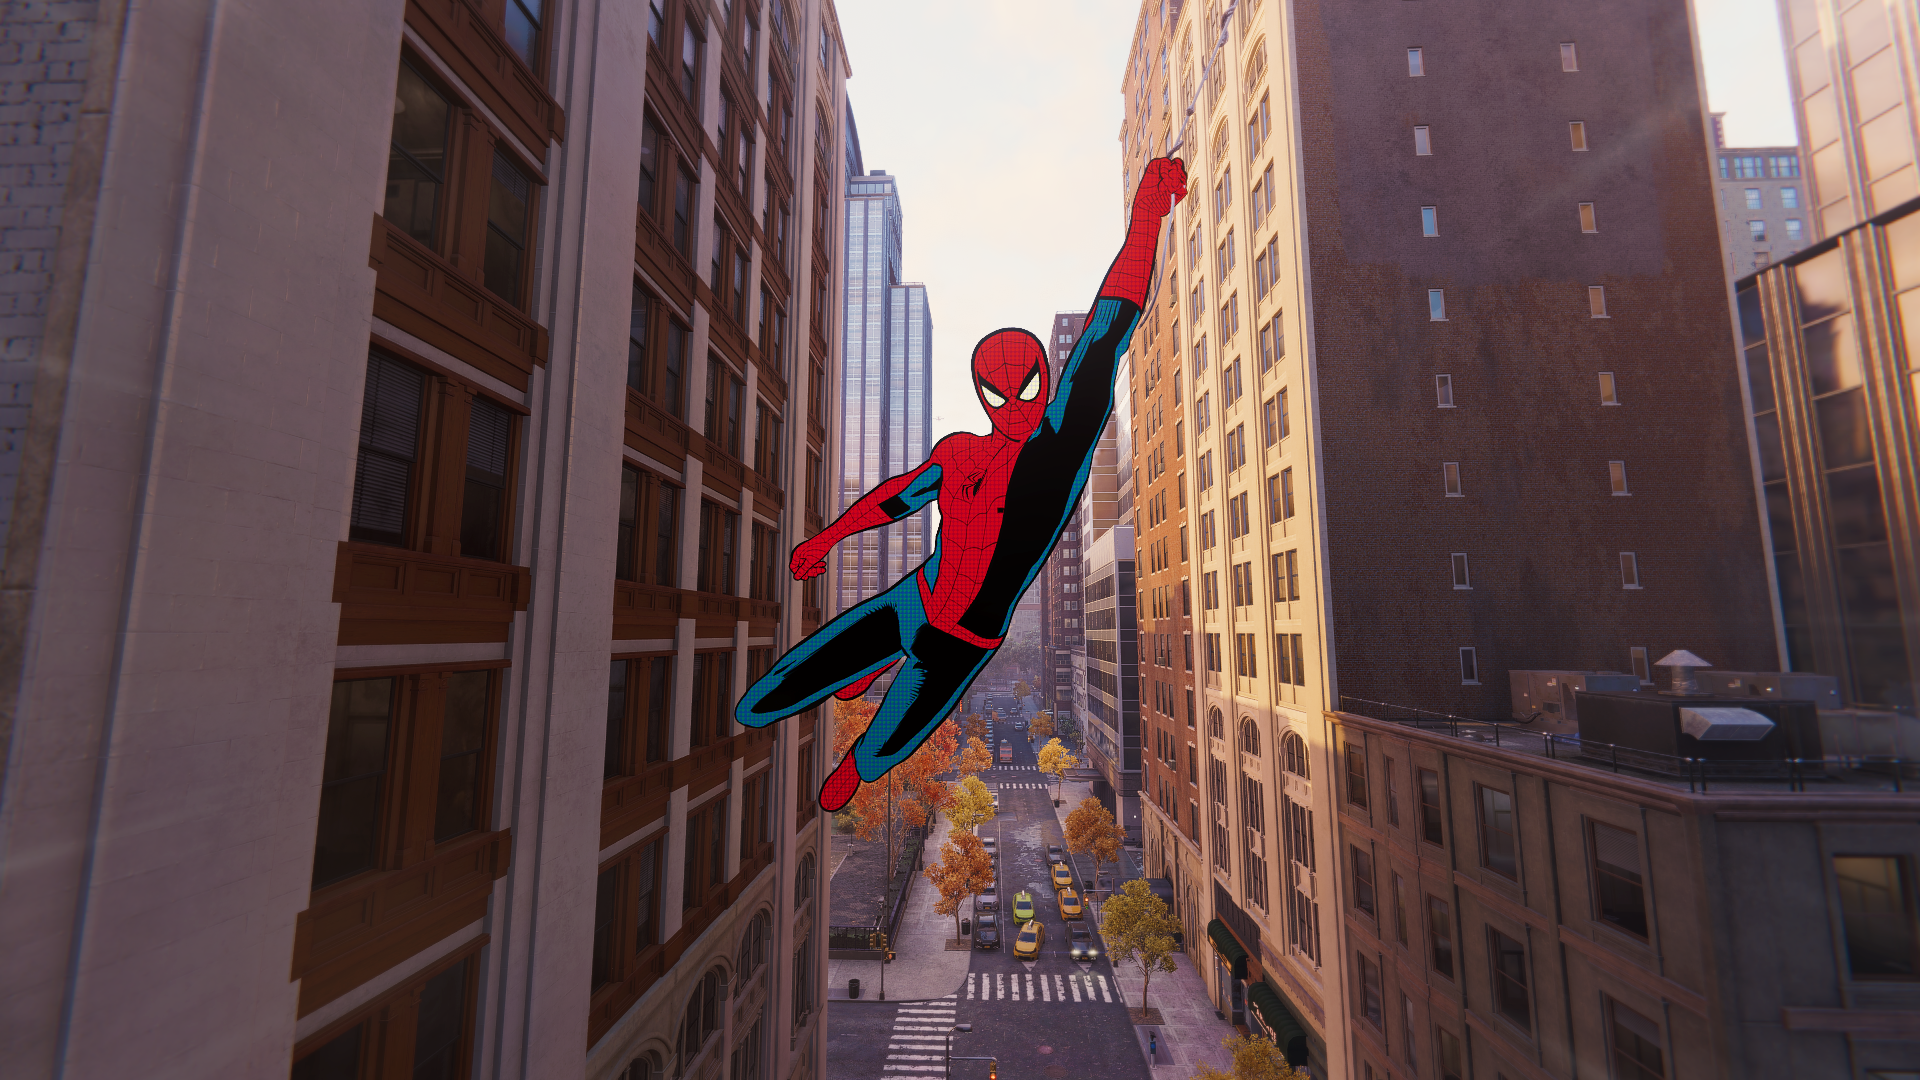 General 1920x1080 Spider-Man Spider-Man (2018) Marvel Comics Marvel Super Heroes marvel's spider man CGI superhero